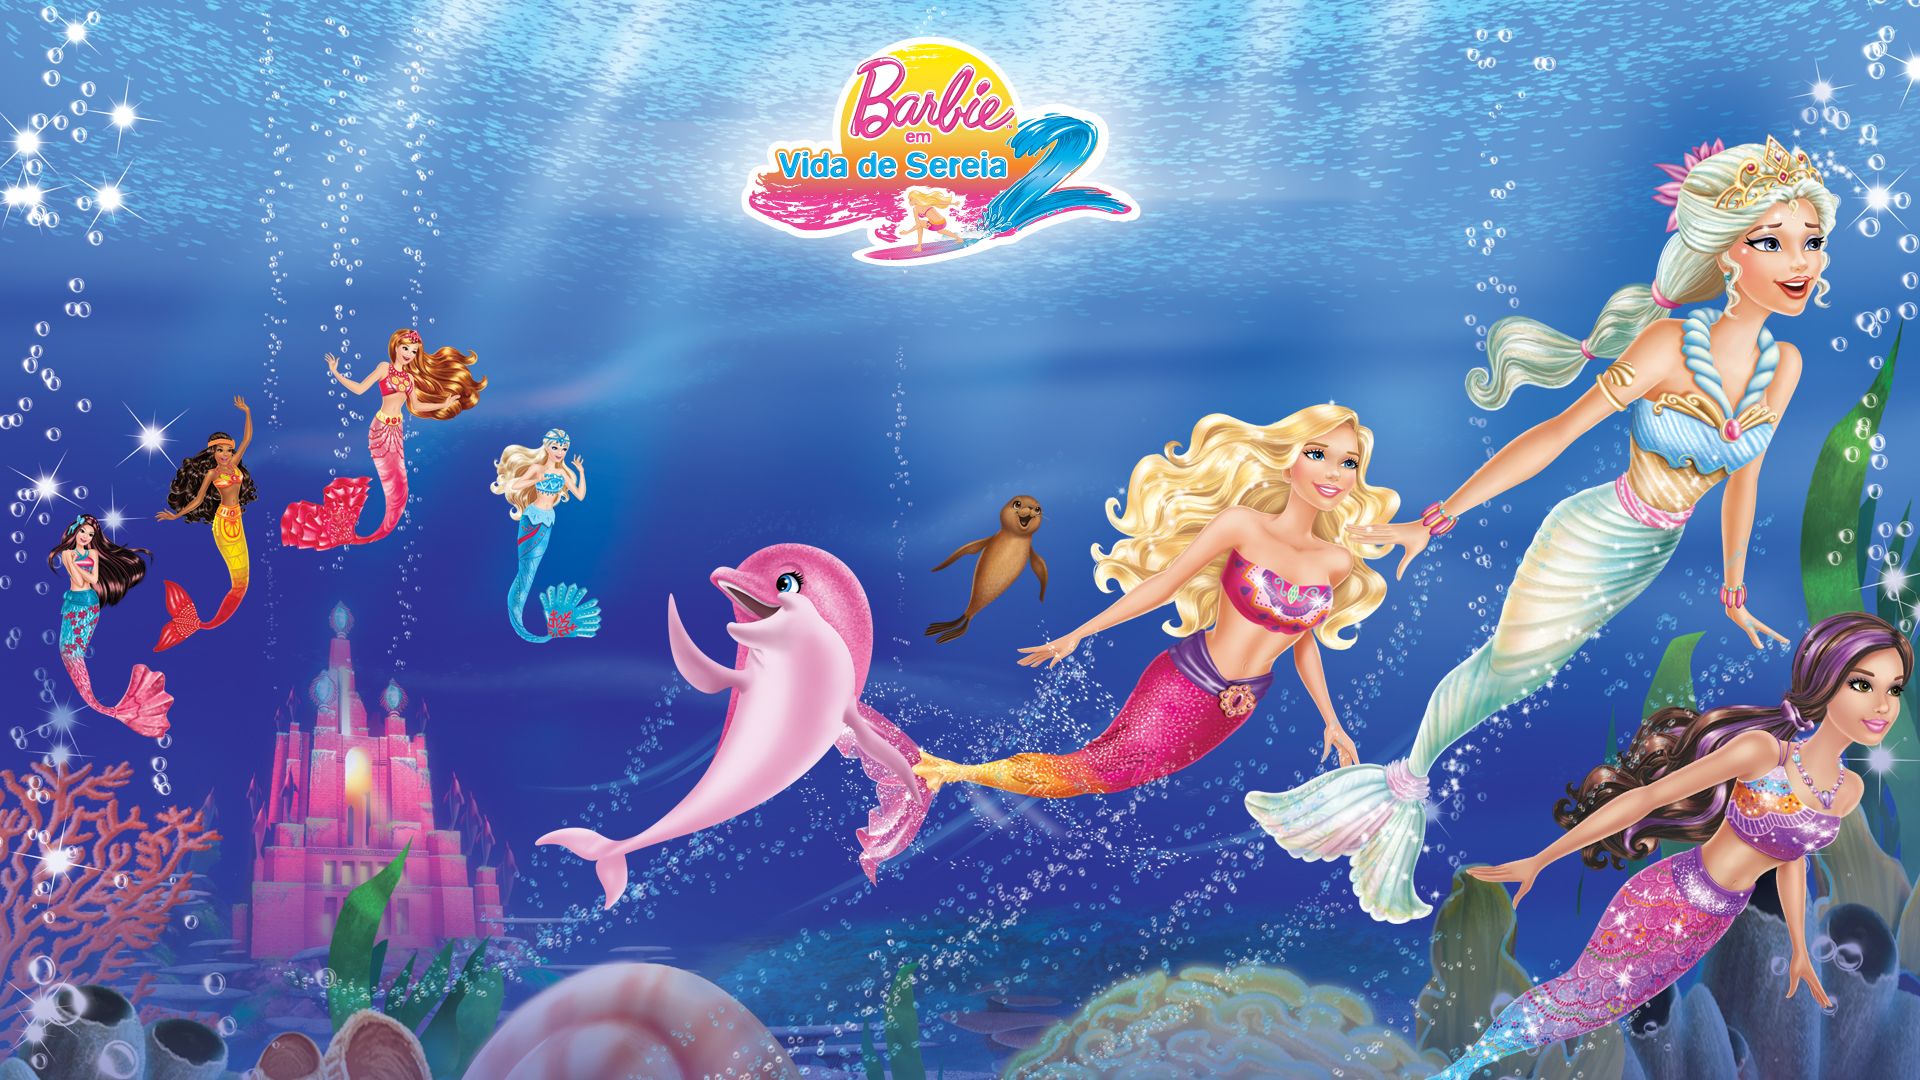 Barbie Mermaid Tale 2 - Barbie Princess Wallpaper (31681531) - Fanpop